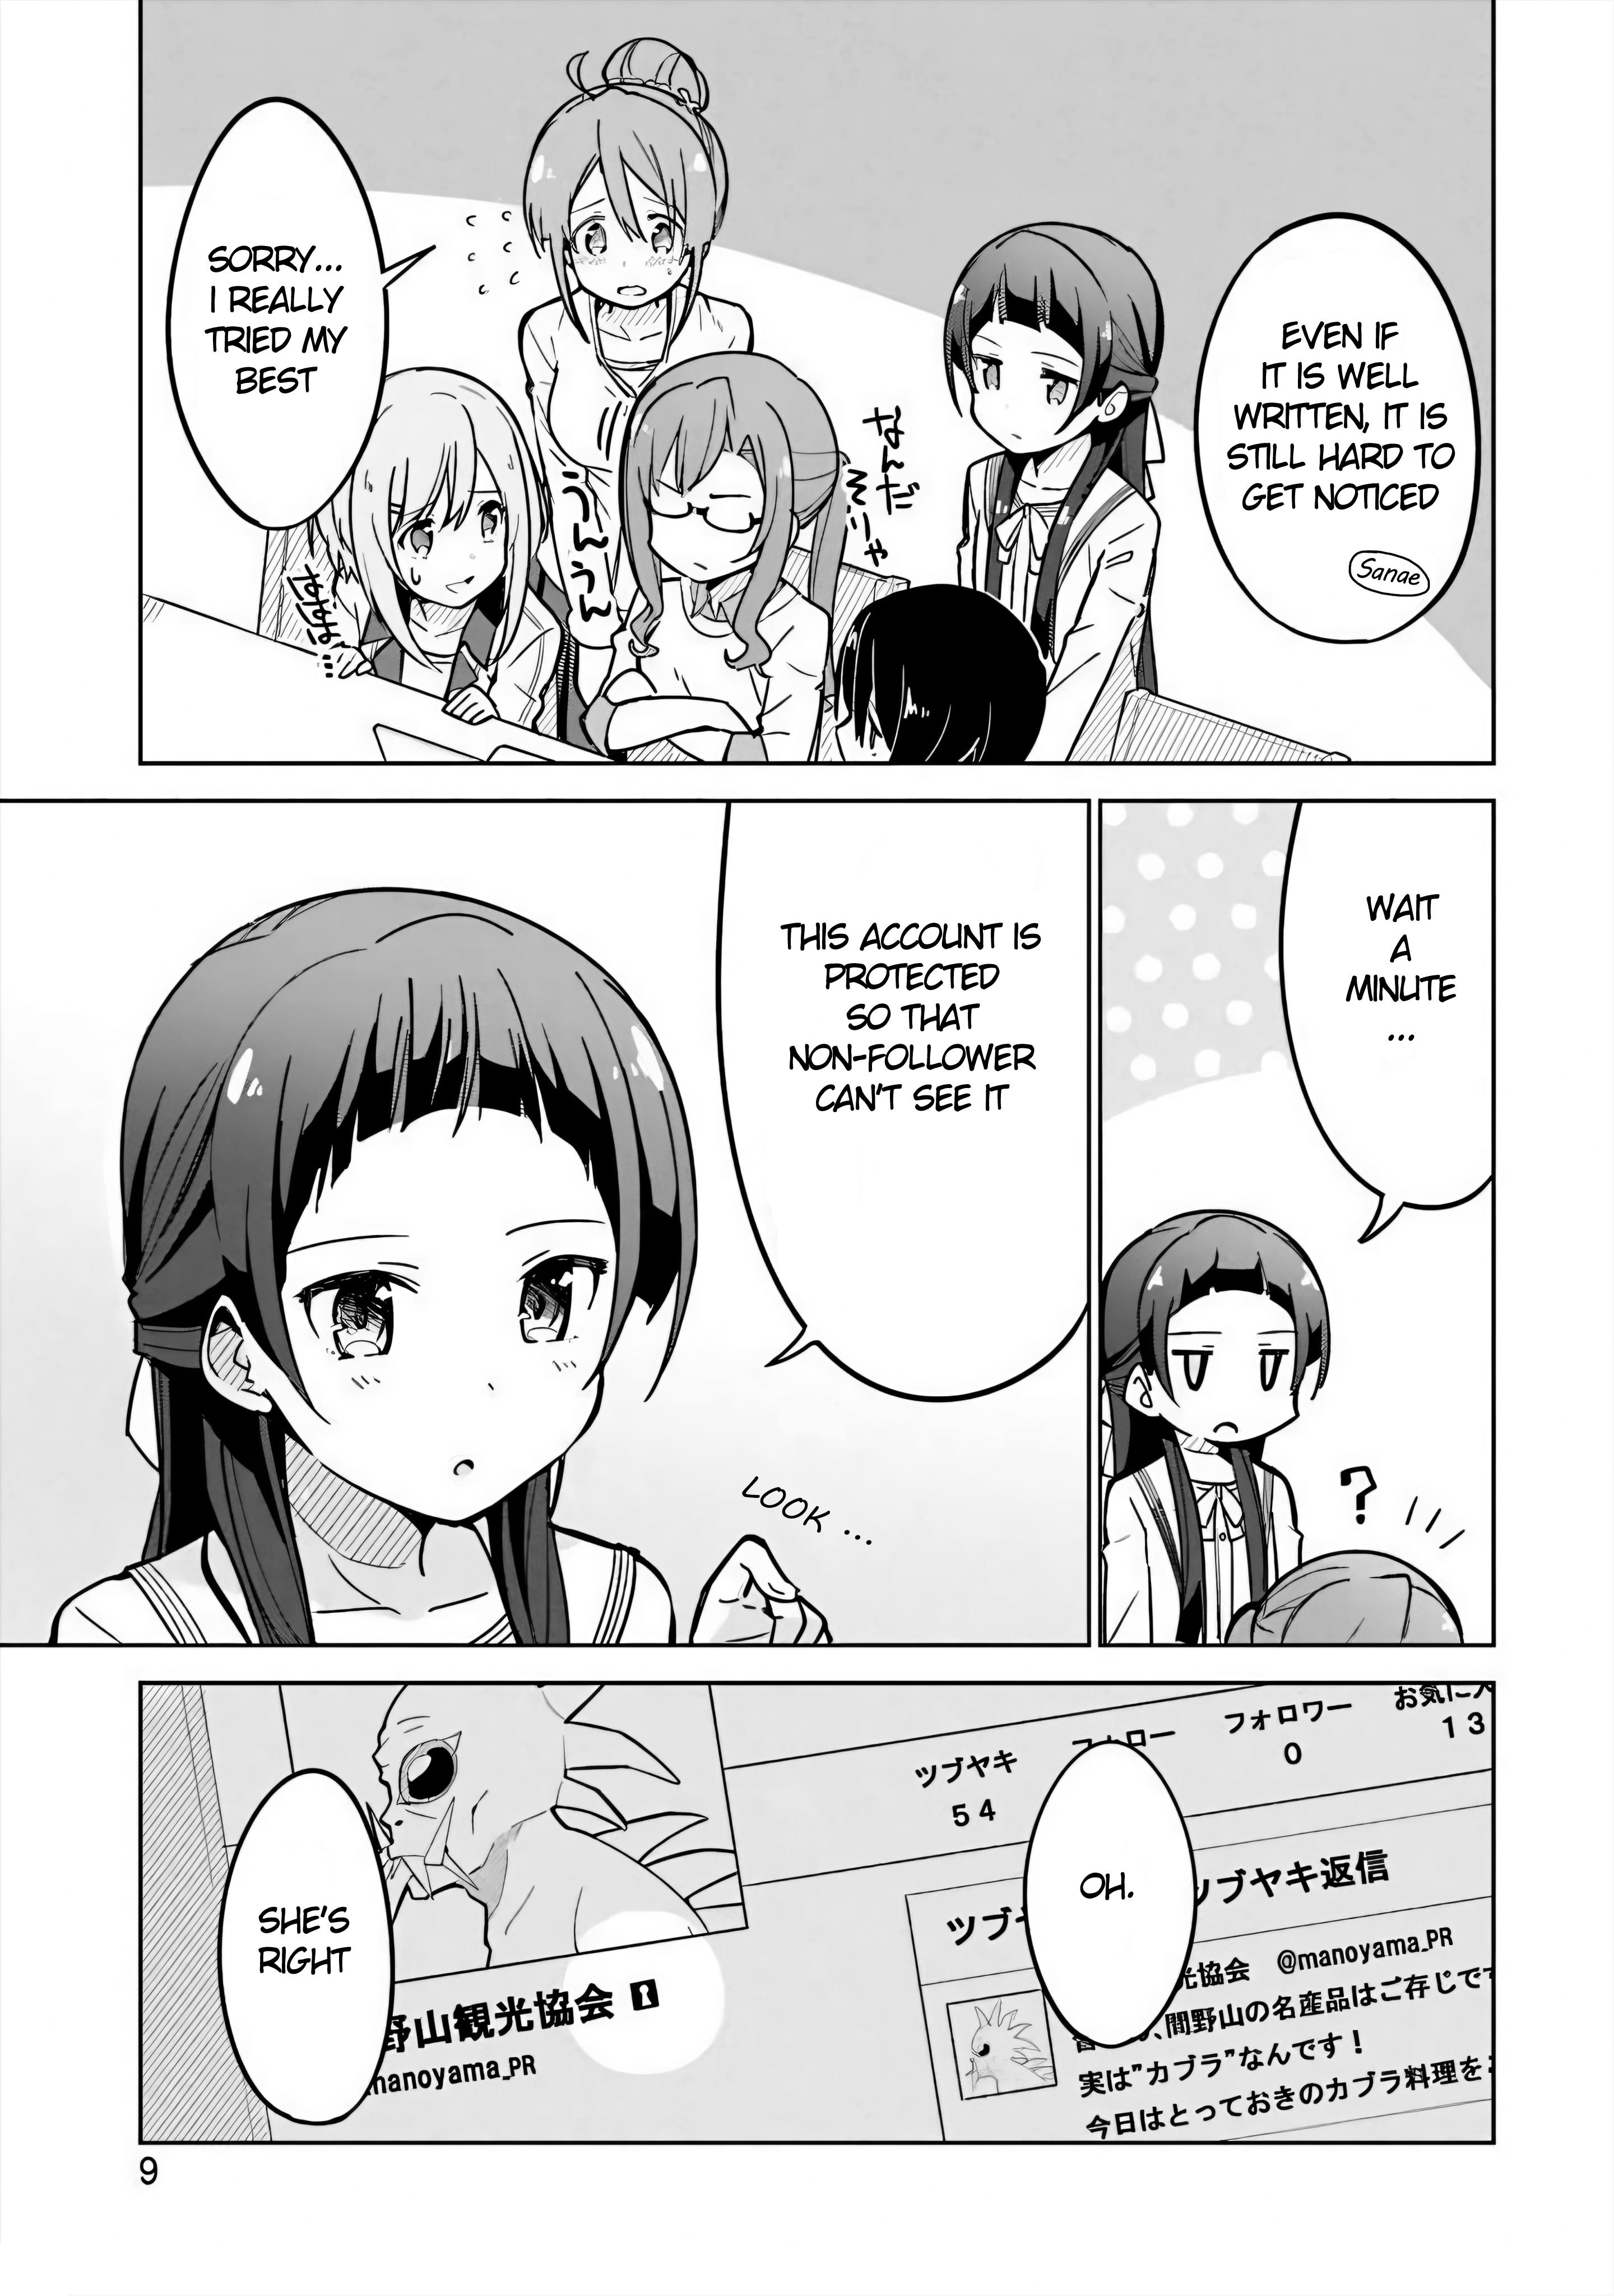 Sakura Quest Side Story: Ririko Oribe's Daily Report Vol 1 Chapter 1 #10